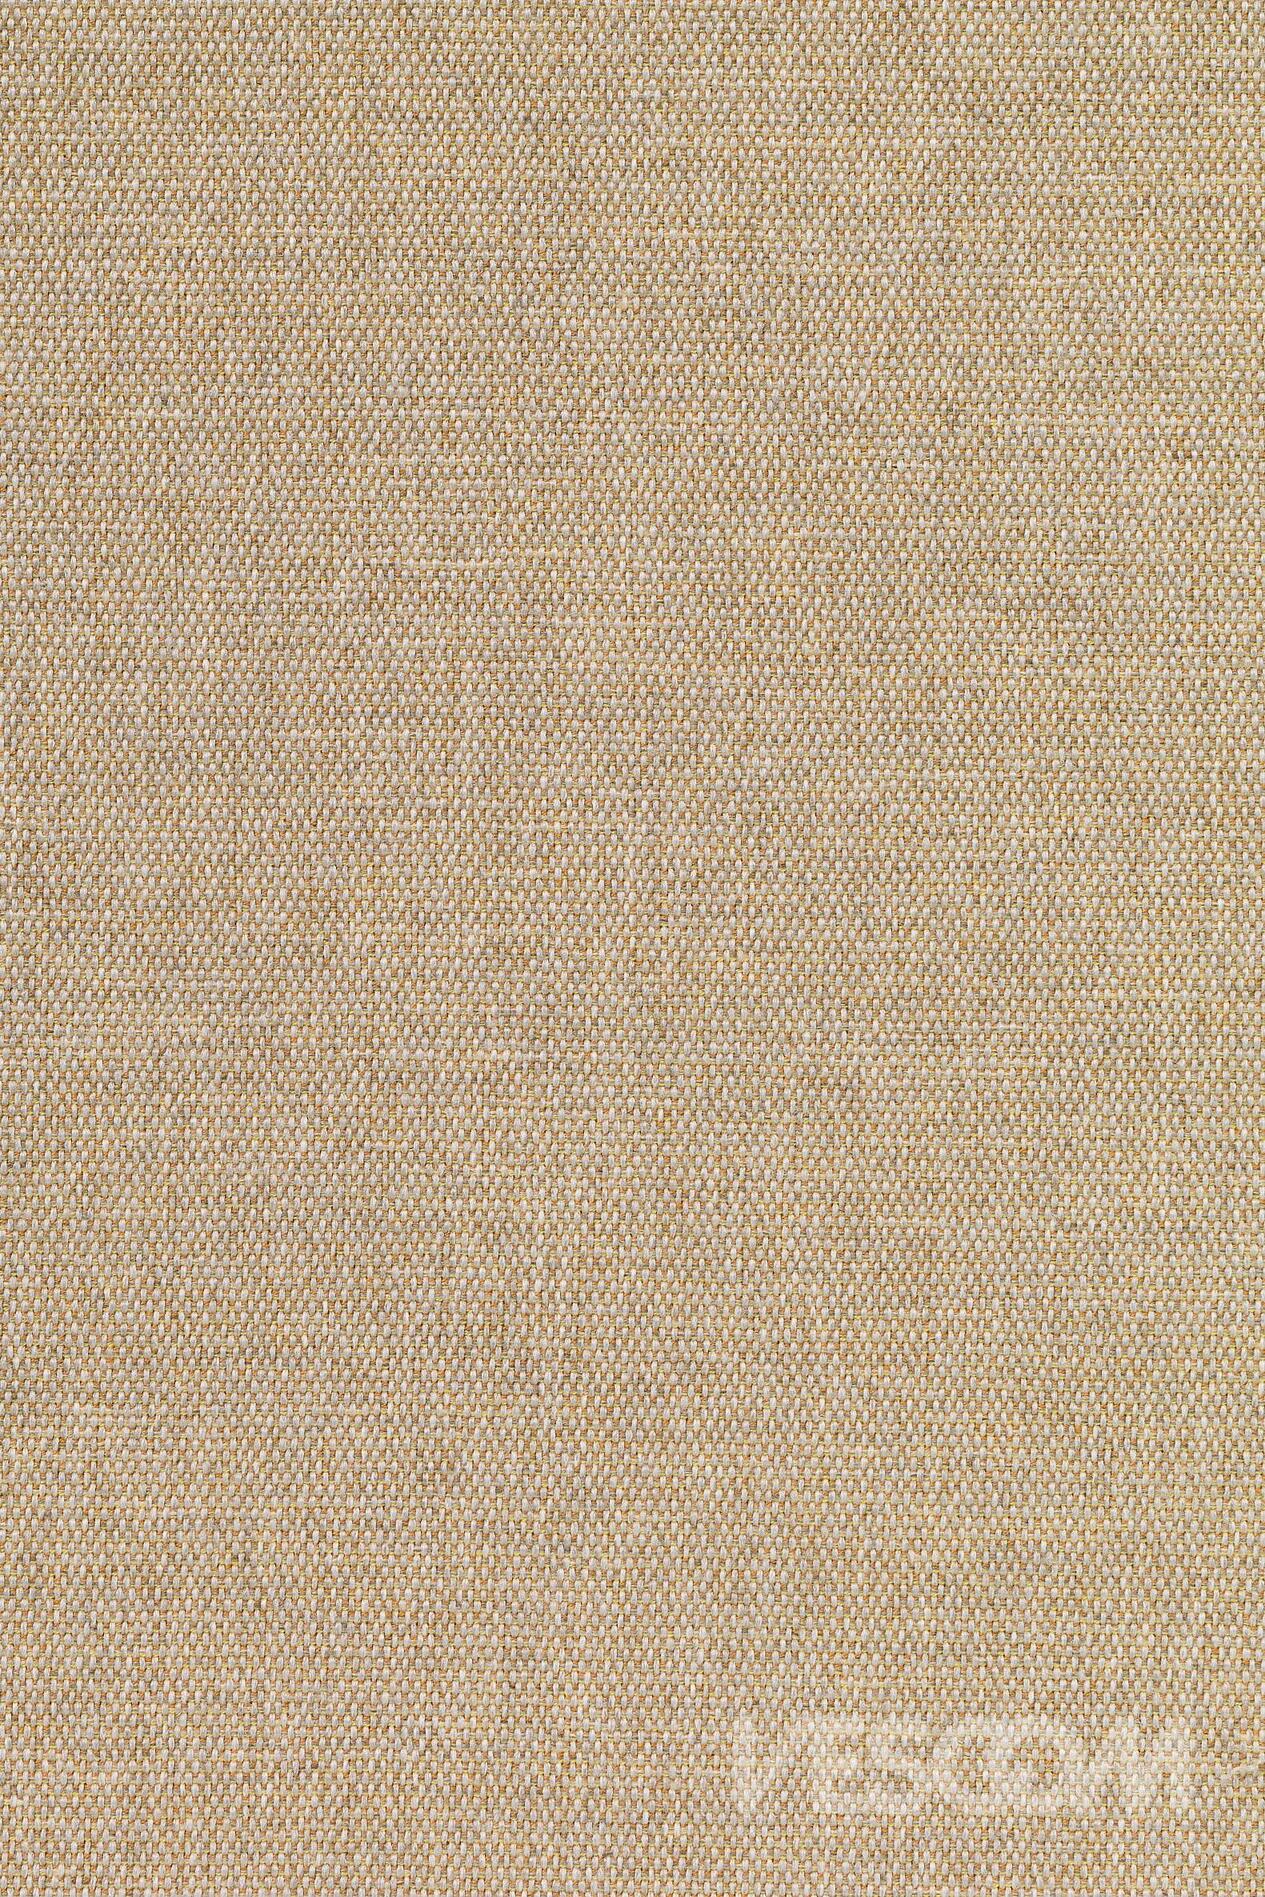 vescom-tula-curtain-fabric-8081-14